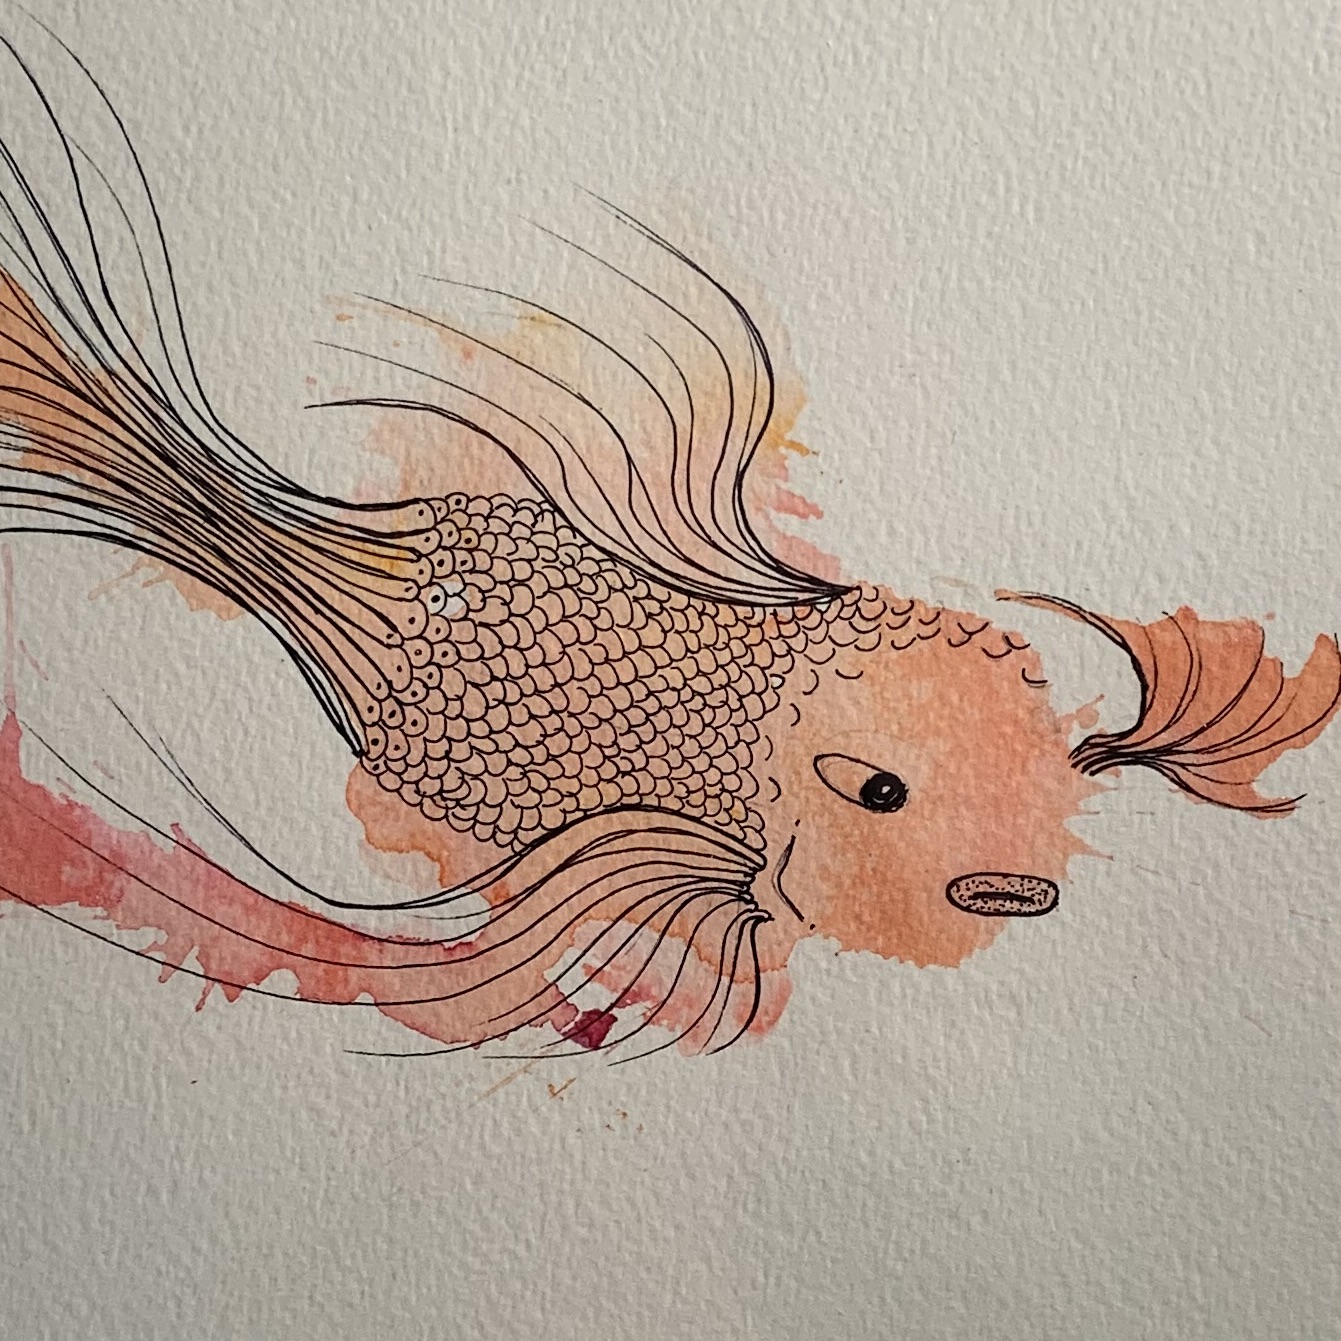 001: Image description. Artwork of a pink and orange fish